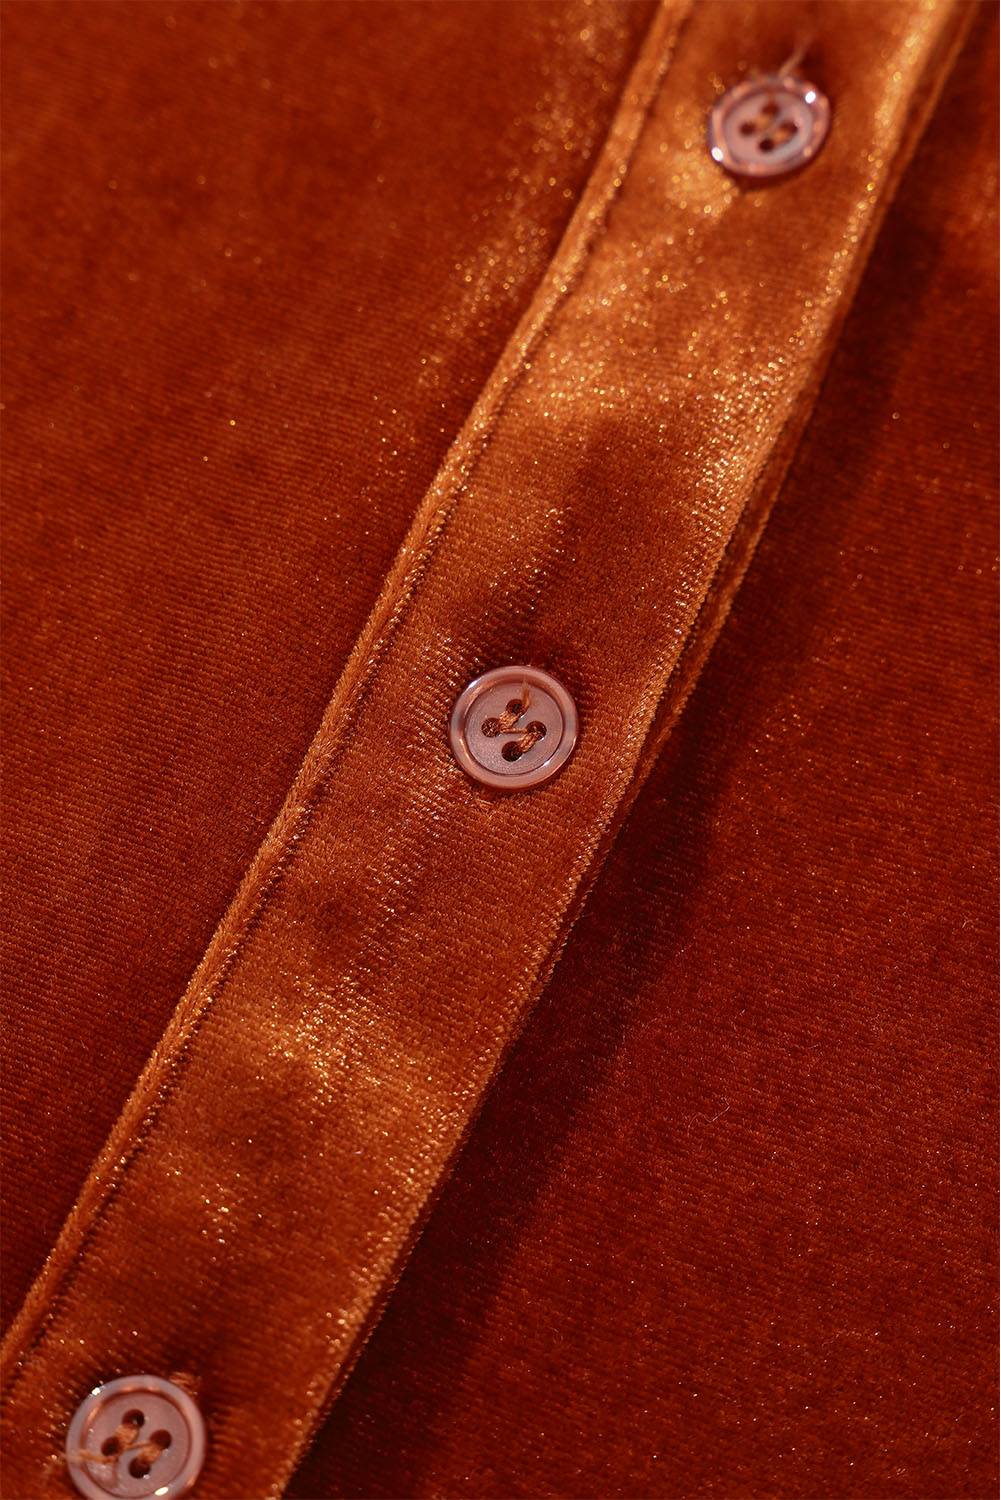 a close up of a button on a brown shirt